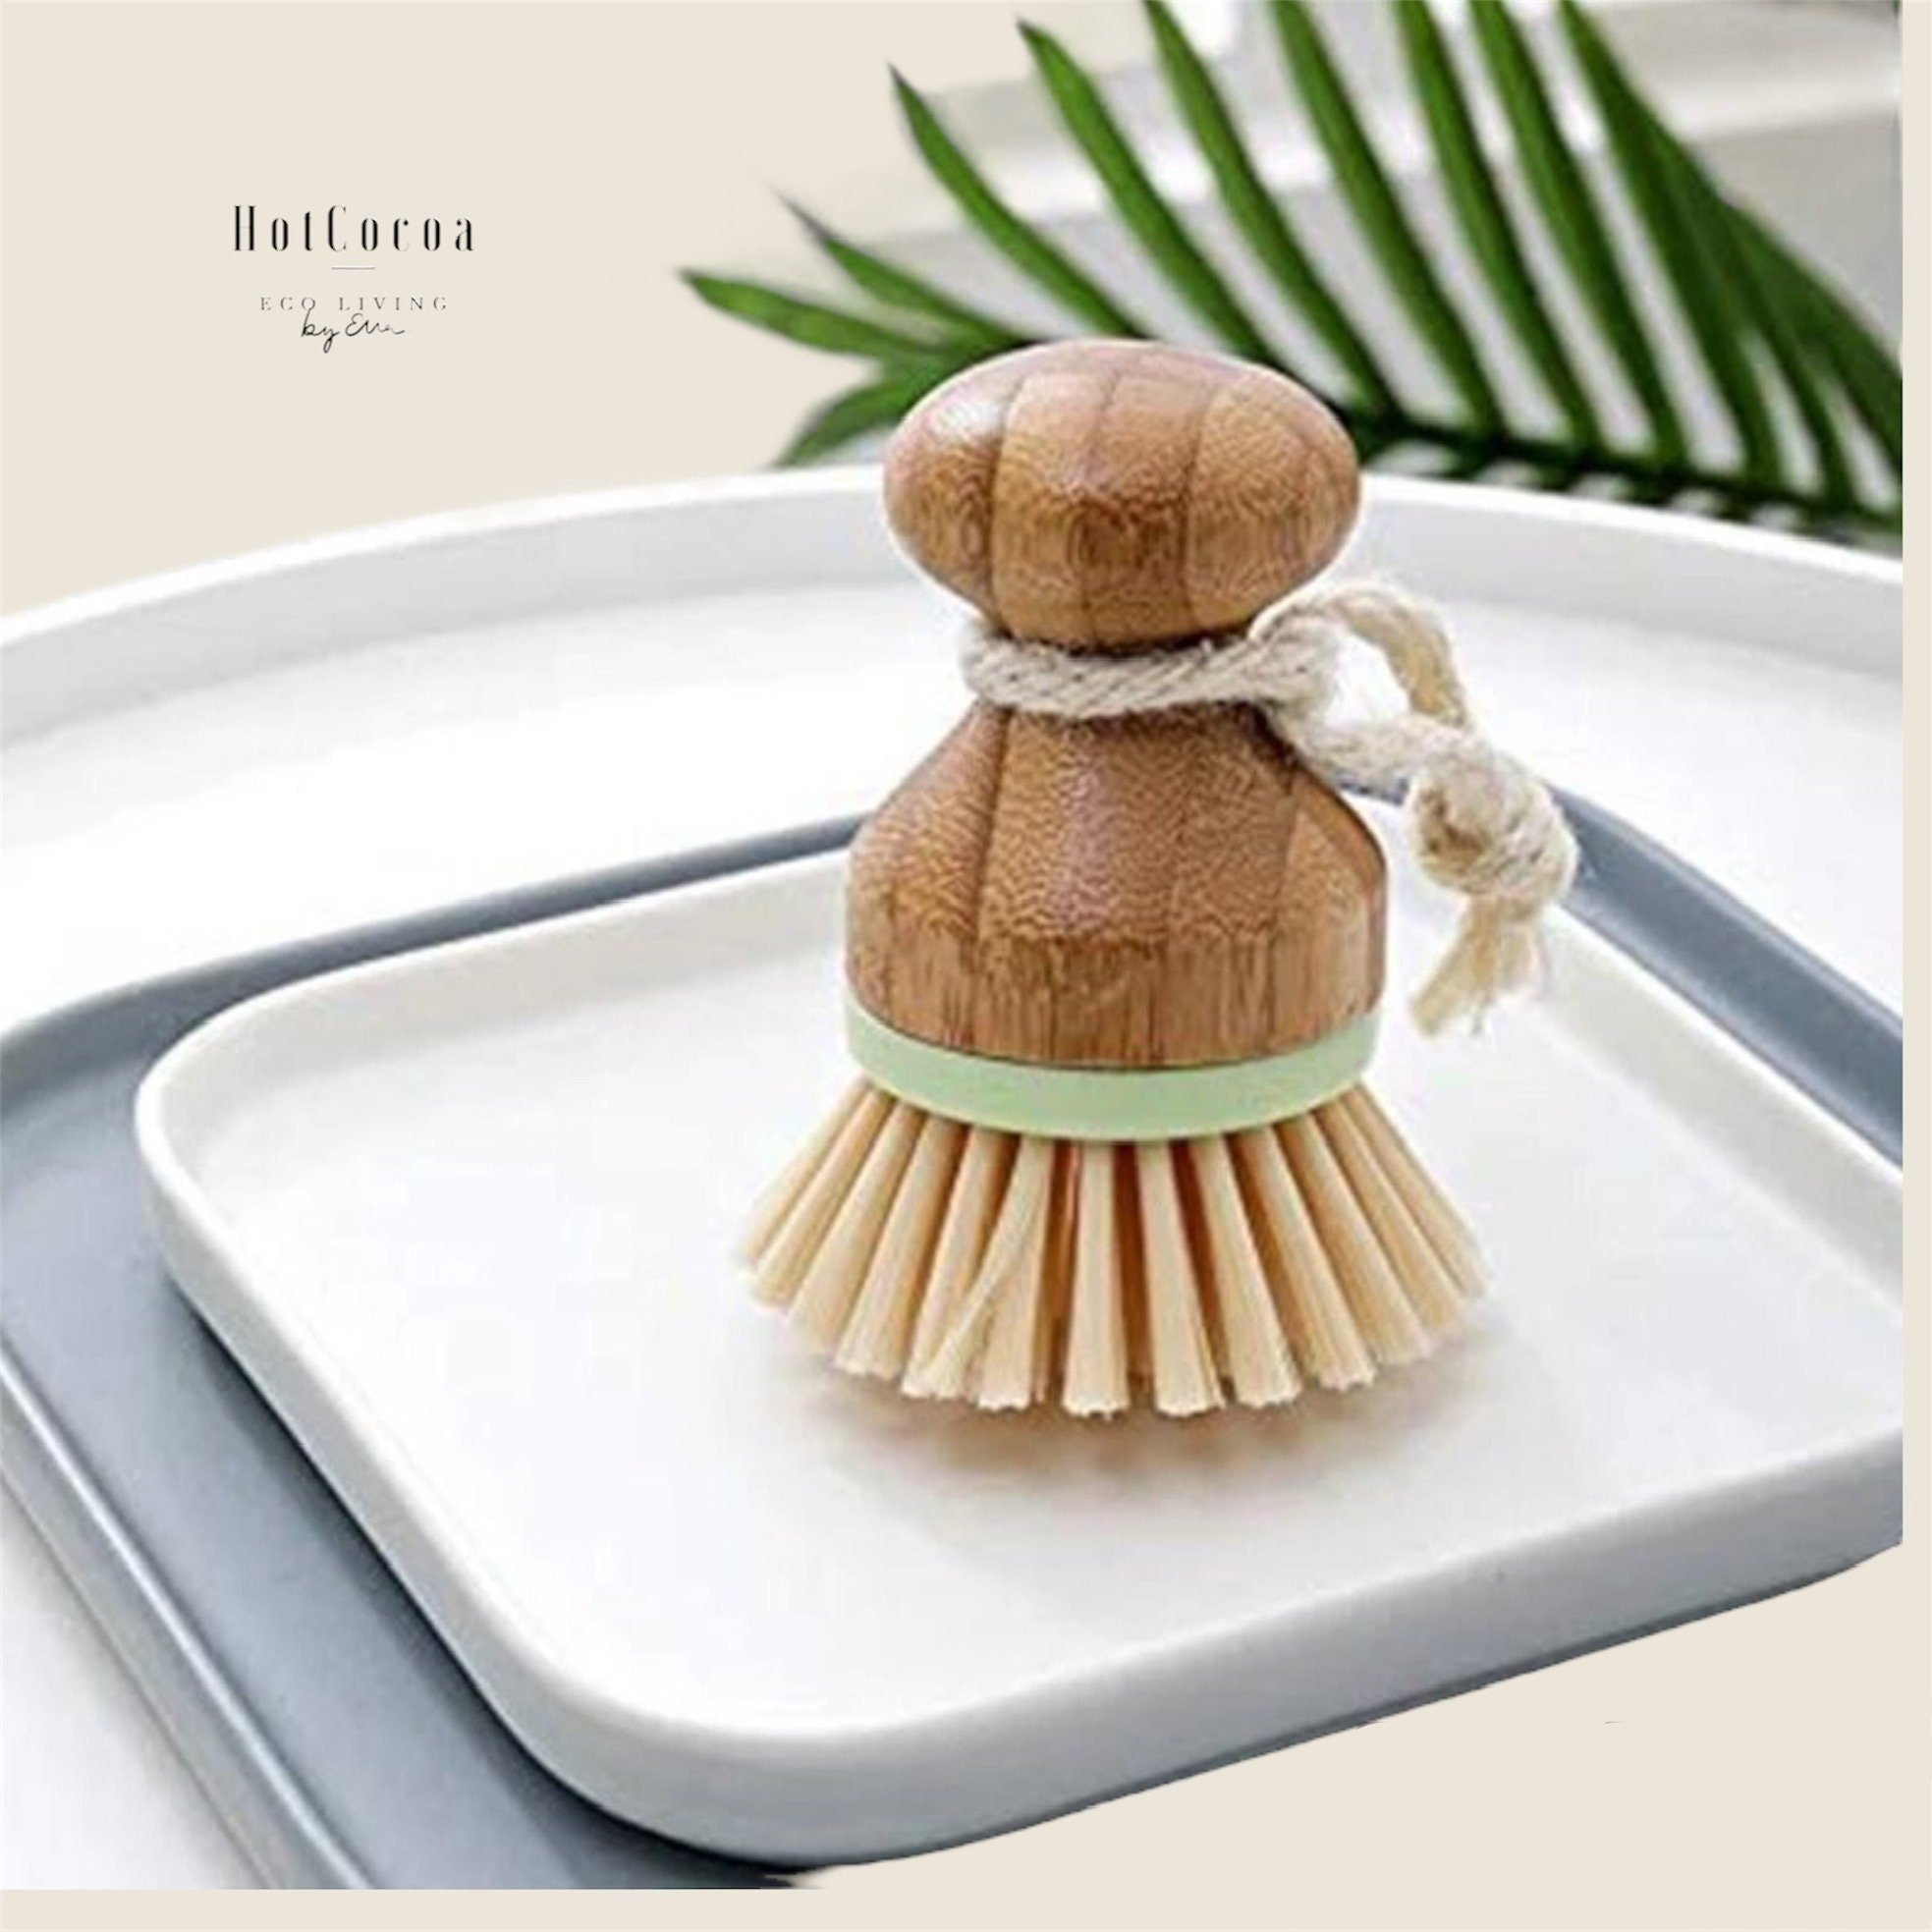 Dish Sisal Solid Wood Creative Pot Brush Long Handle Kitchen